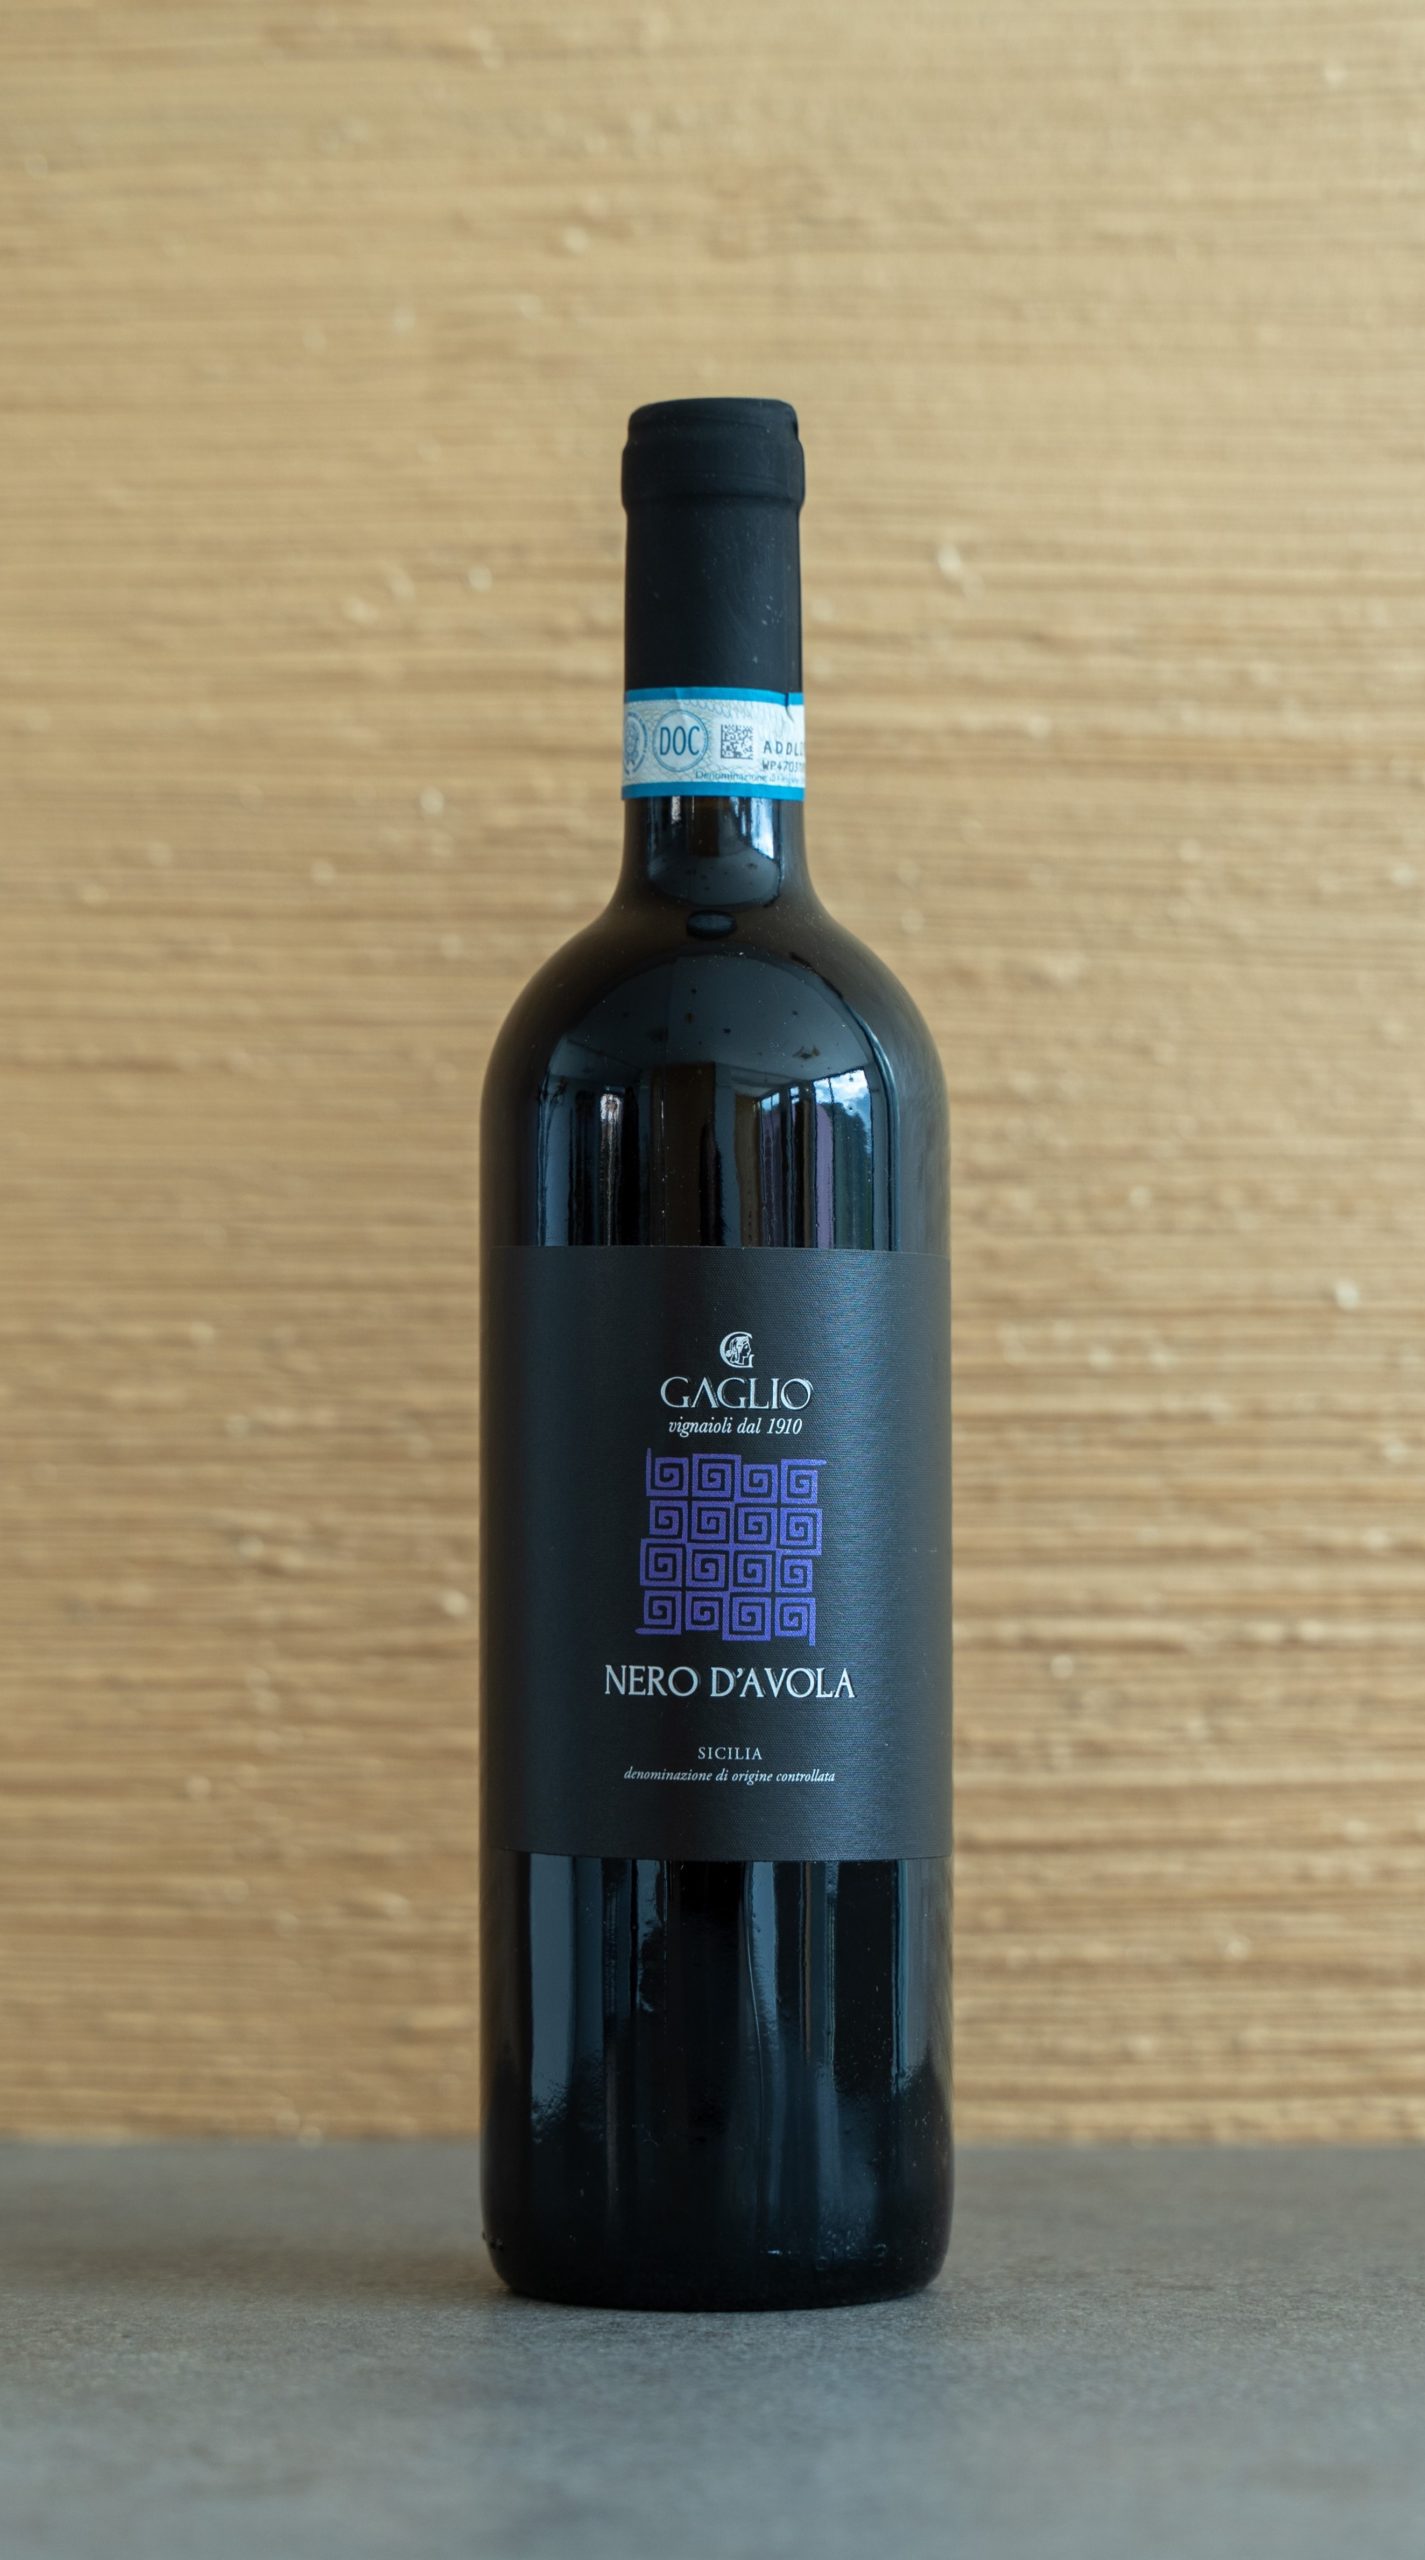 Nero d'avola - Vini Gaglio